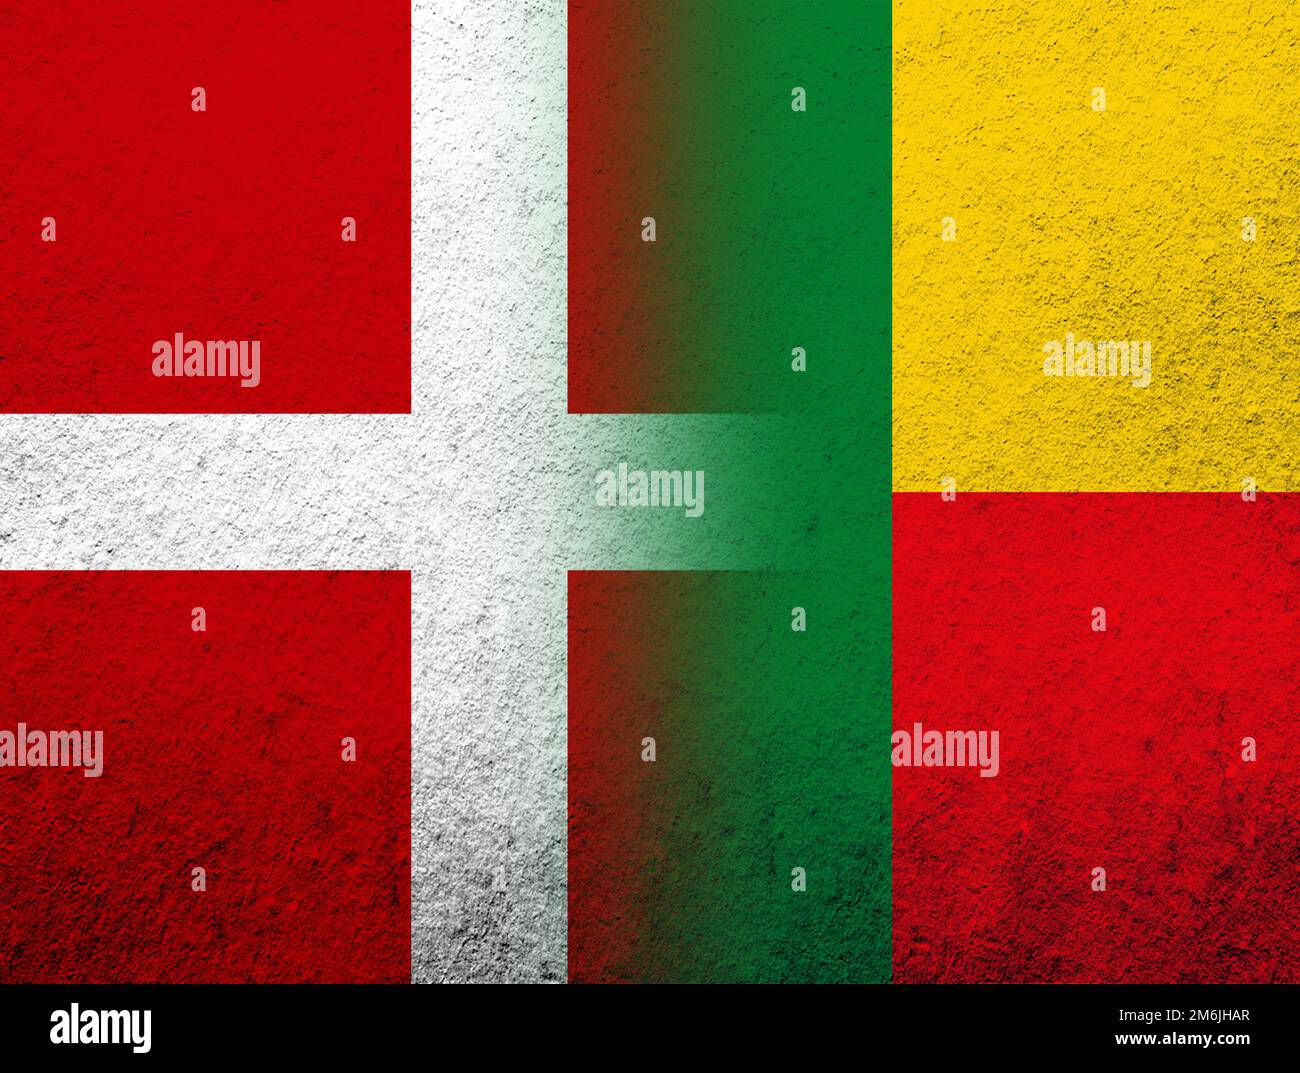 The Kingdom of Denmark National flag with Republic of Benin National flag. Grunge Background Stock Photo